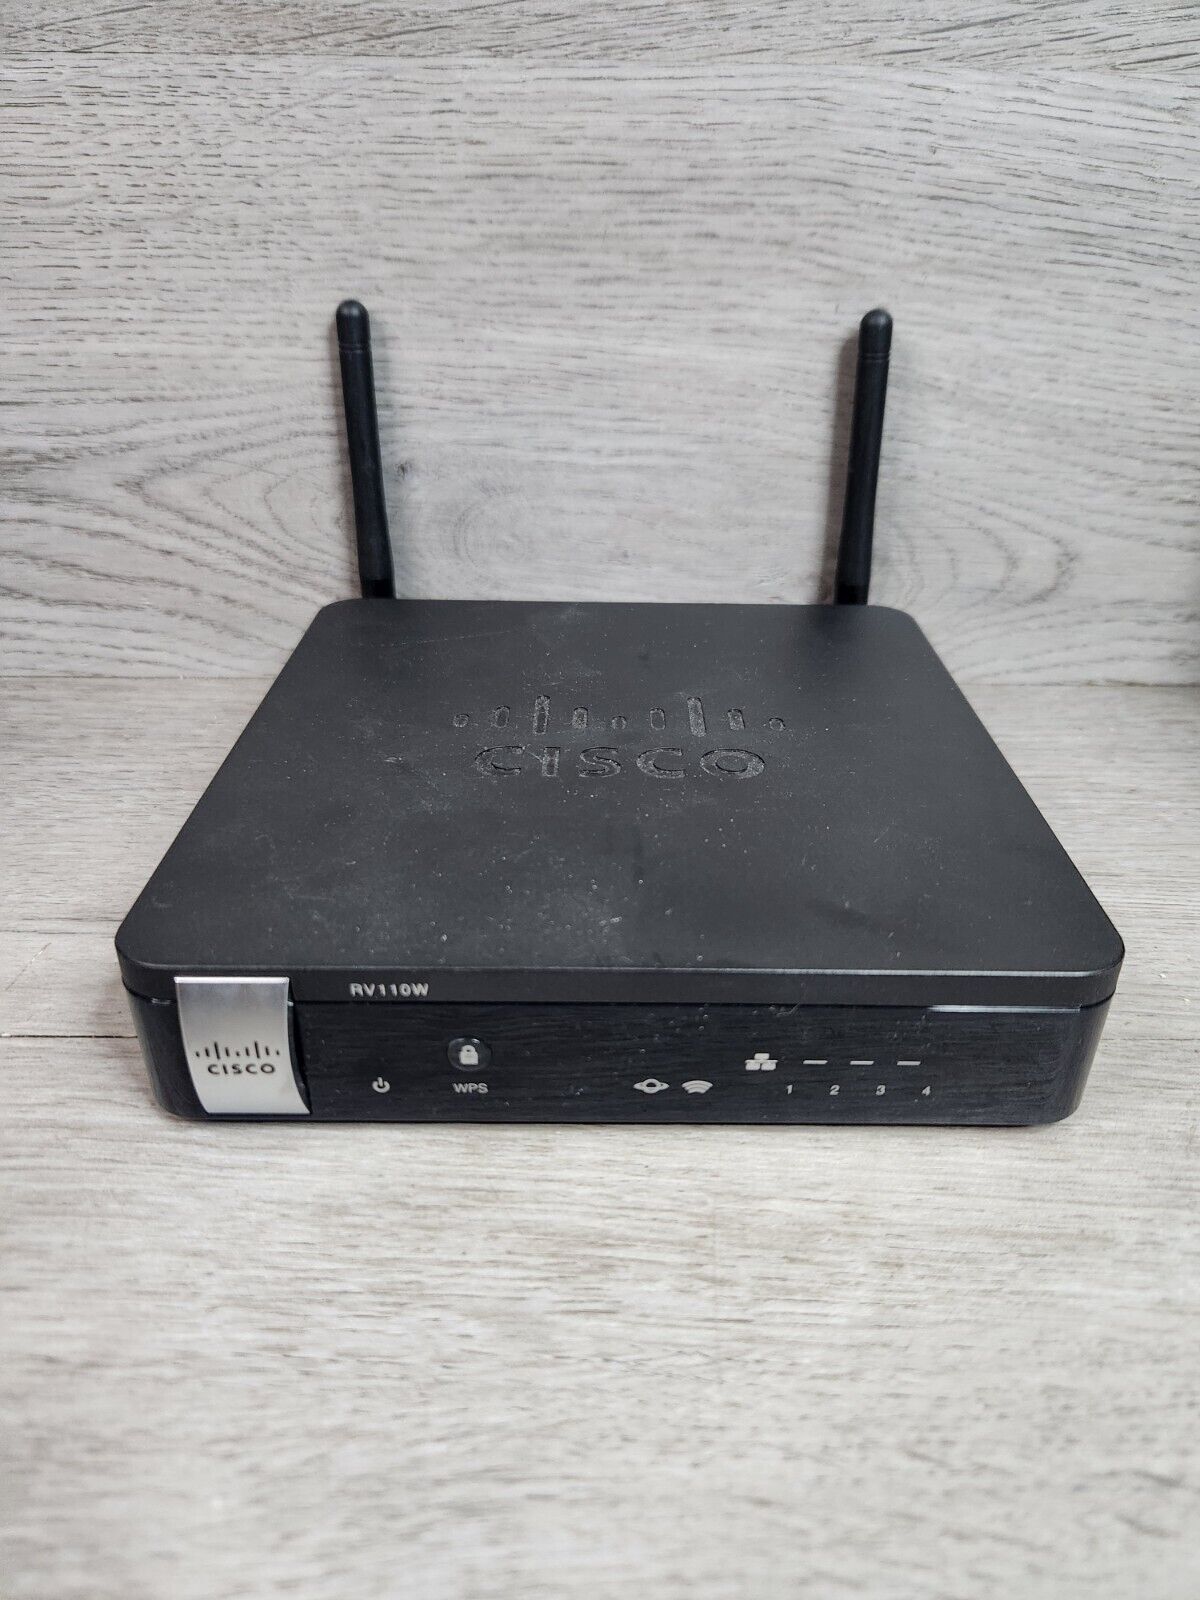 Cisco RV110W Wireless-N VPN Firewall RV110W-A-NA-K9 V03 with AC Adapter